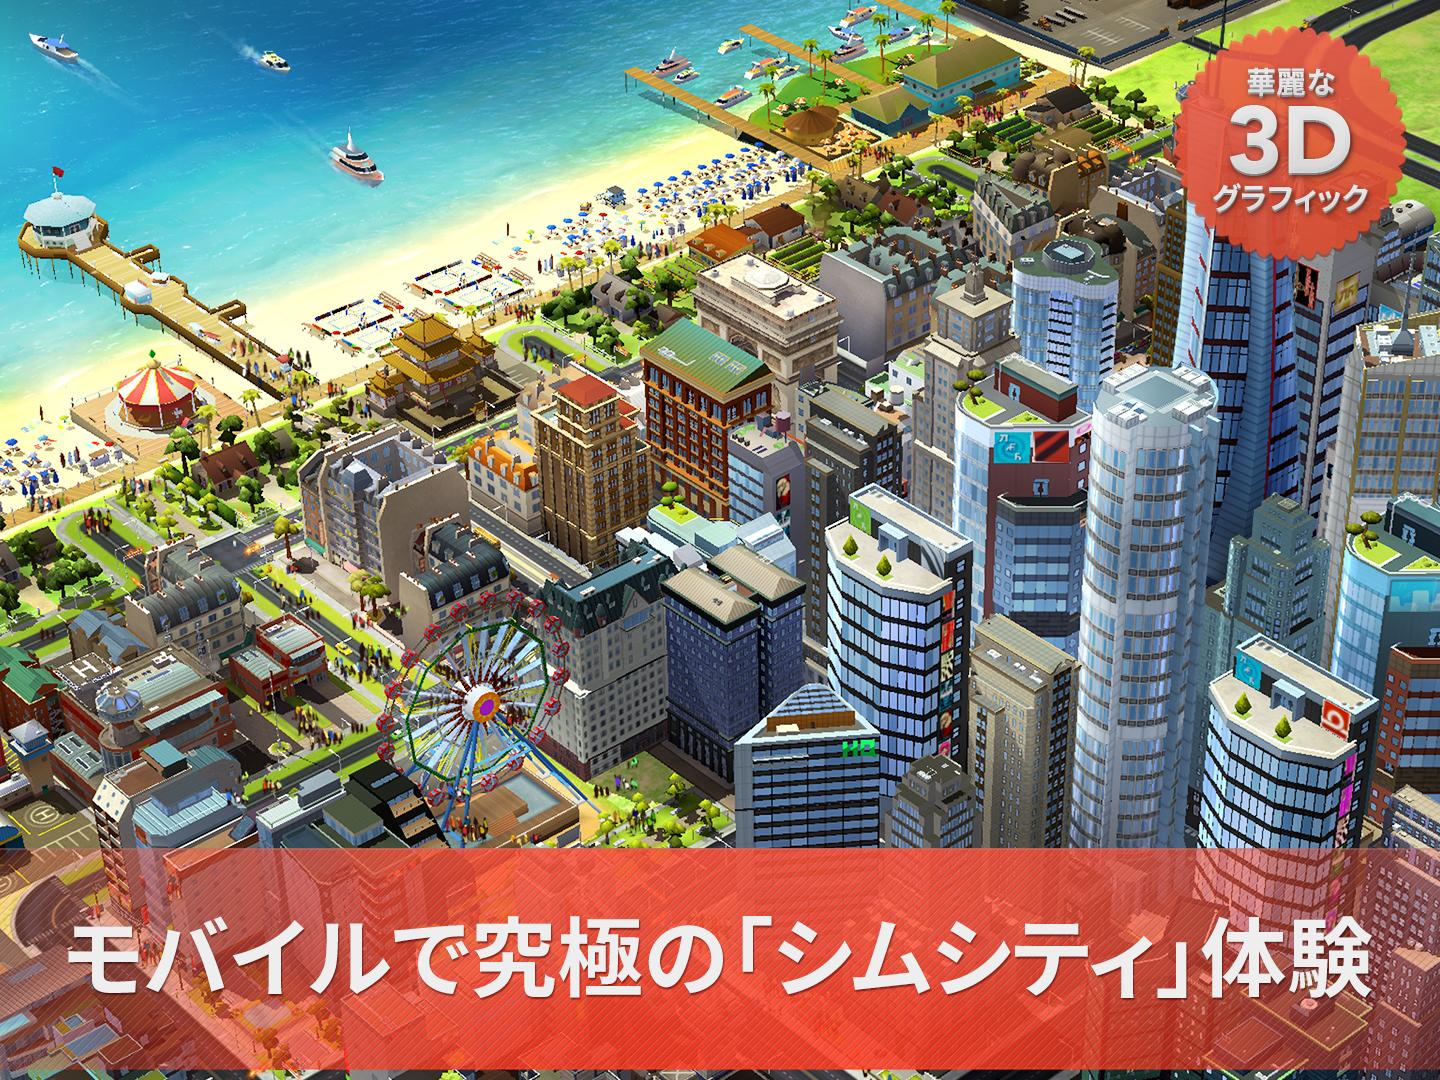 Android application SimCity BuildIt screenshort